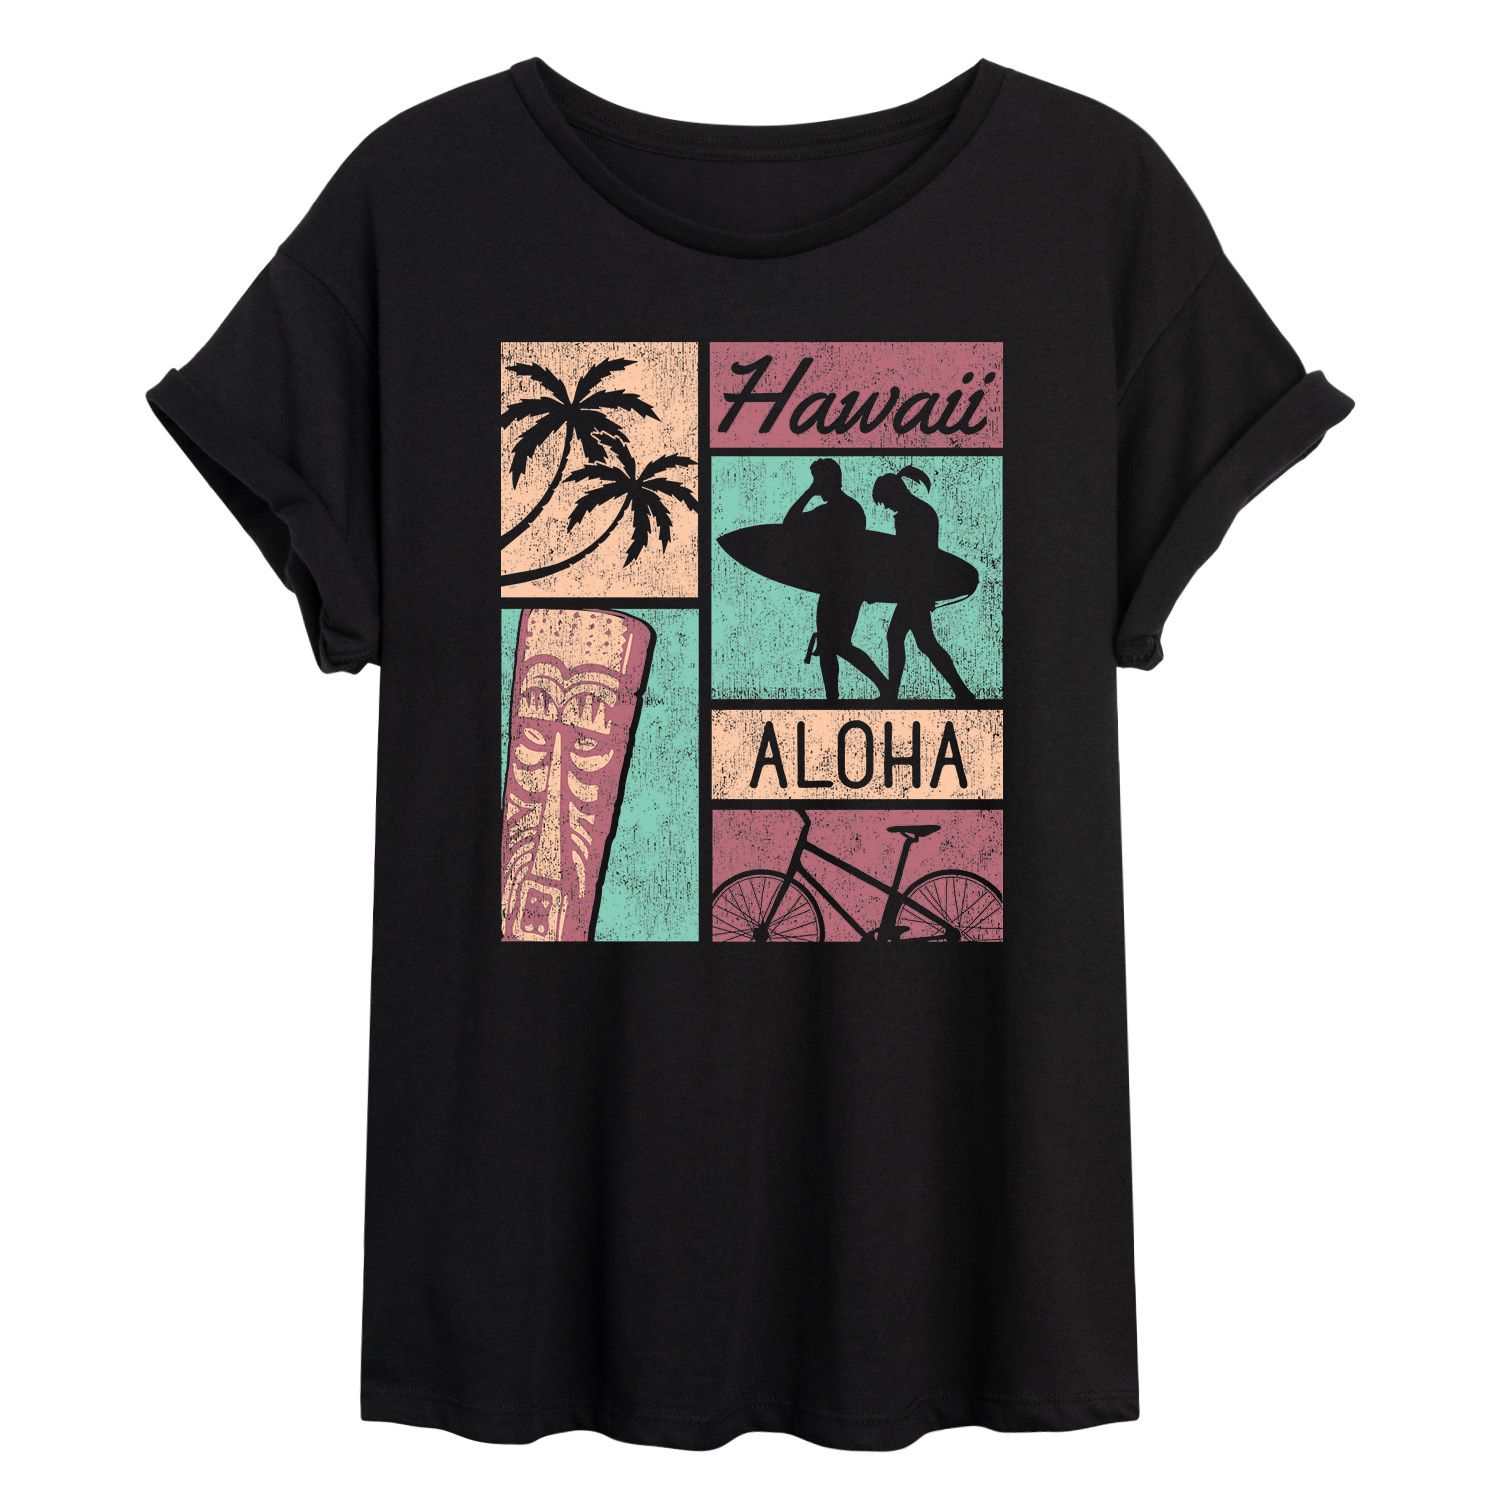 цена Детская футболка большого размера с рисунком Hawaii Aloha в стиле ретро Licensed Character